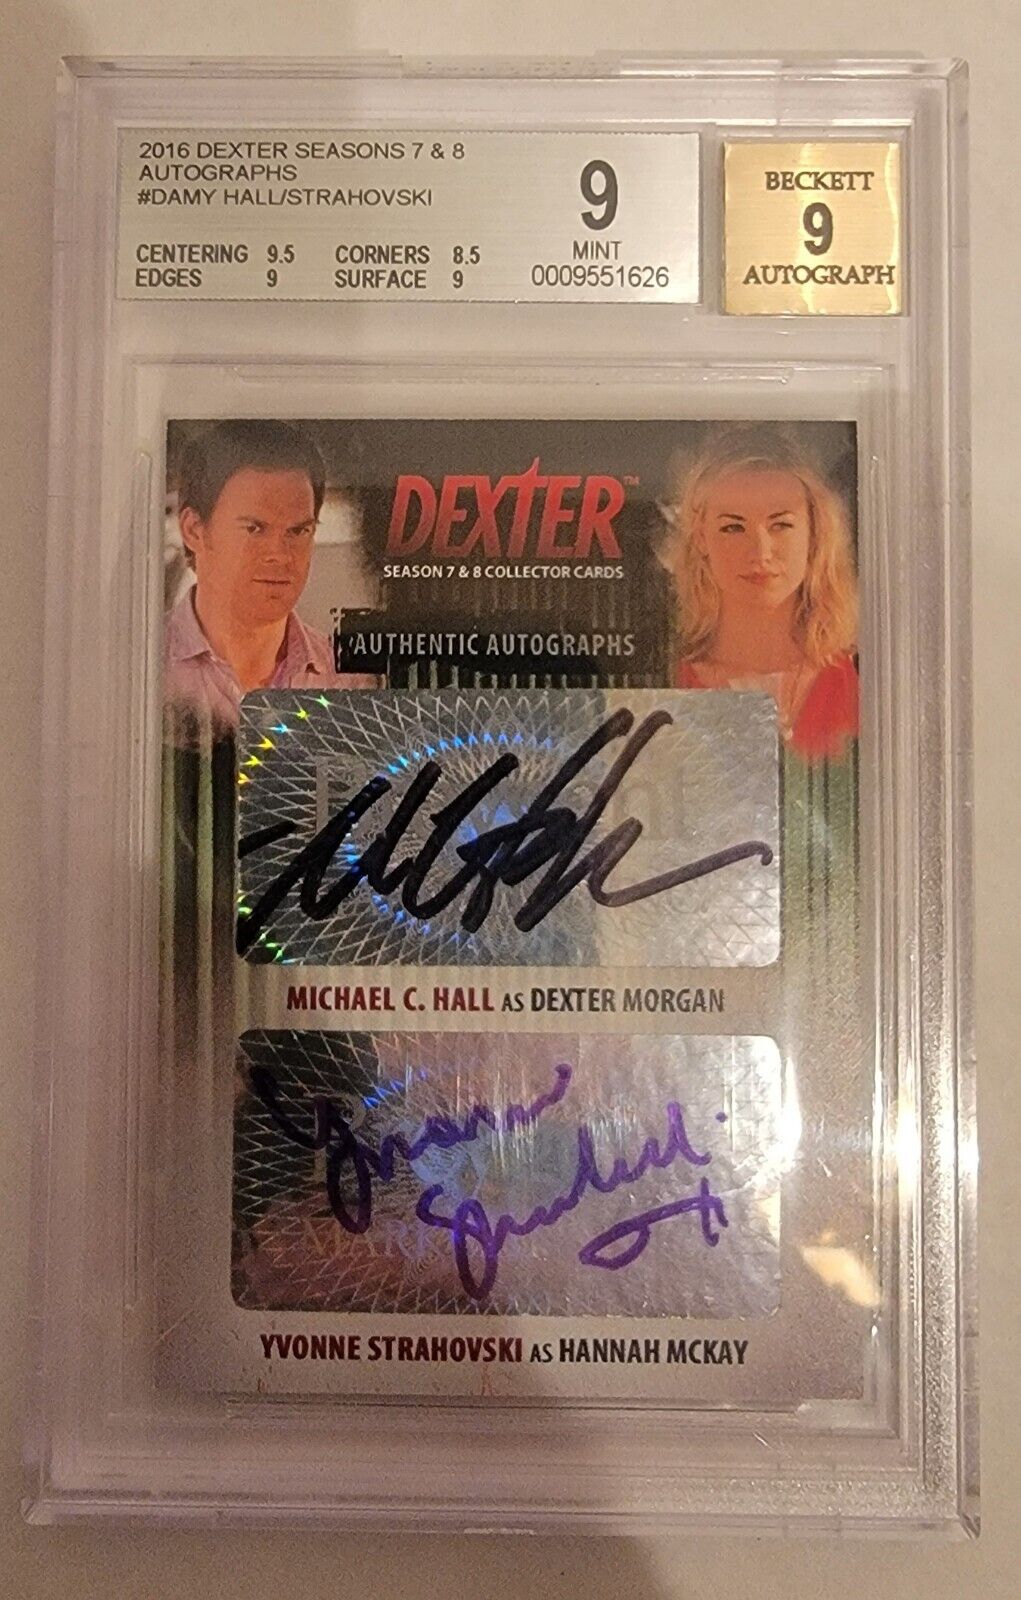 2016 Dexter Seasons 7 & 8 Autograph DAMY Michael C. Hall & Yvonne Strahovski  